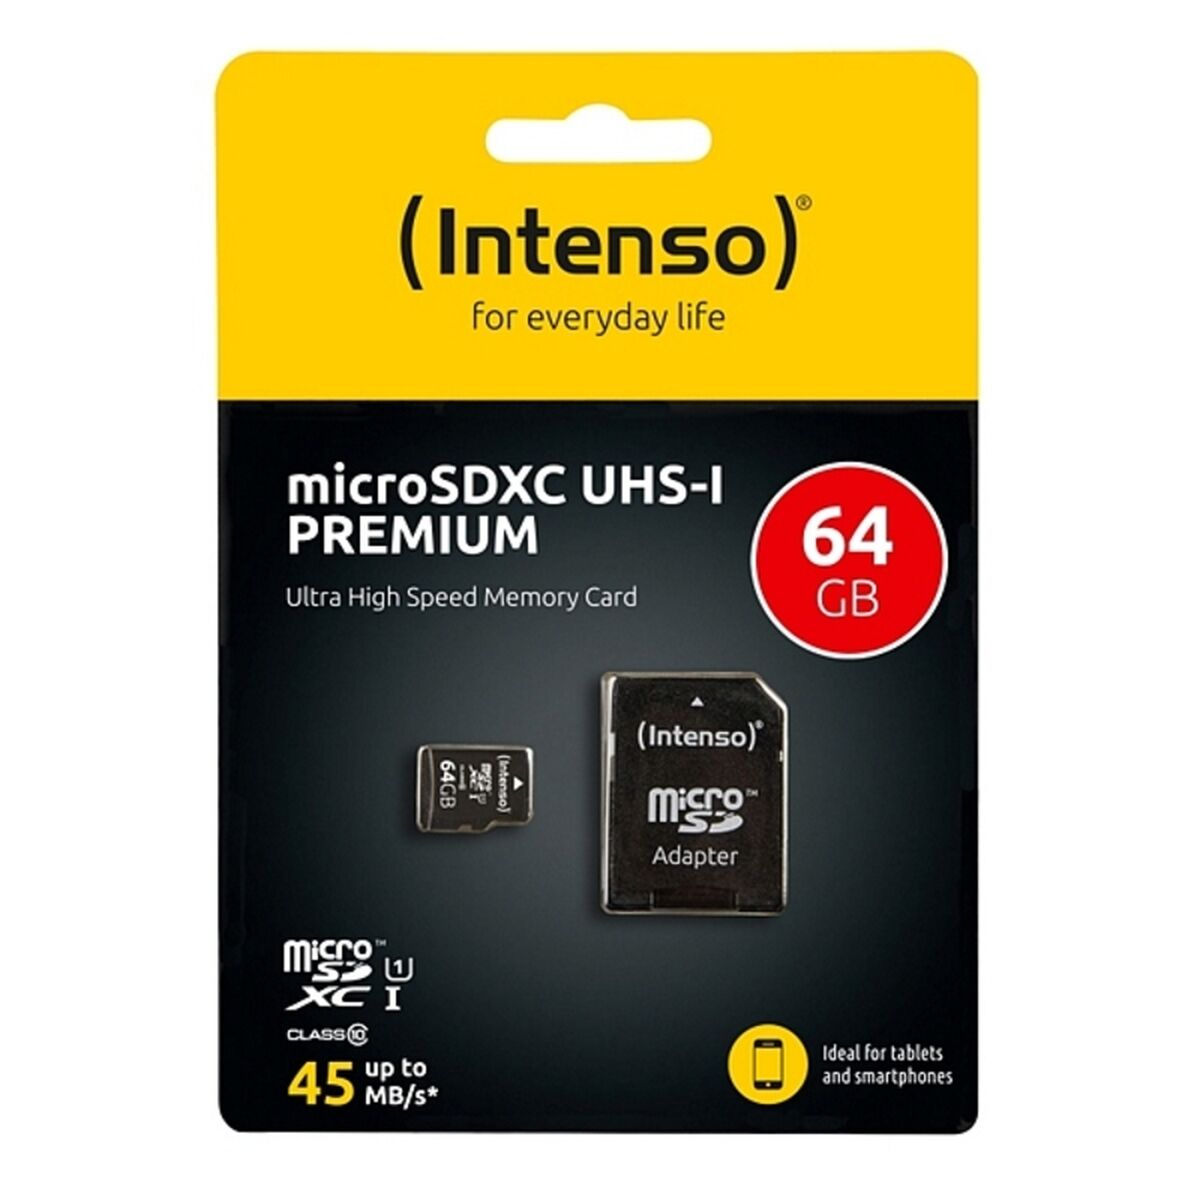 128GB UHS-1 3423491 128 45 Micro-SDXC MICRO PREMIUM, MB/s Speicherkarte, INTENSO GB, SDXC